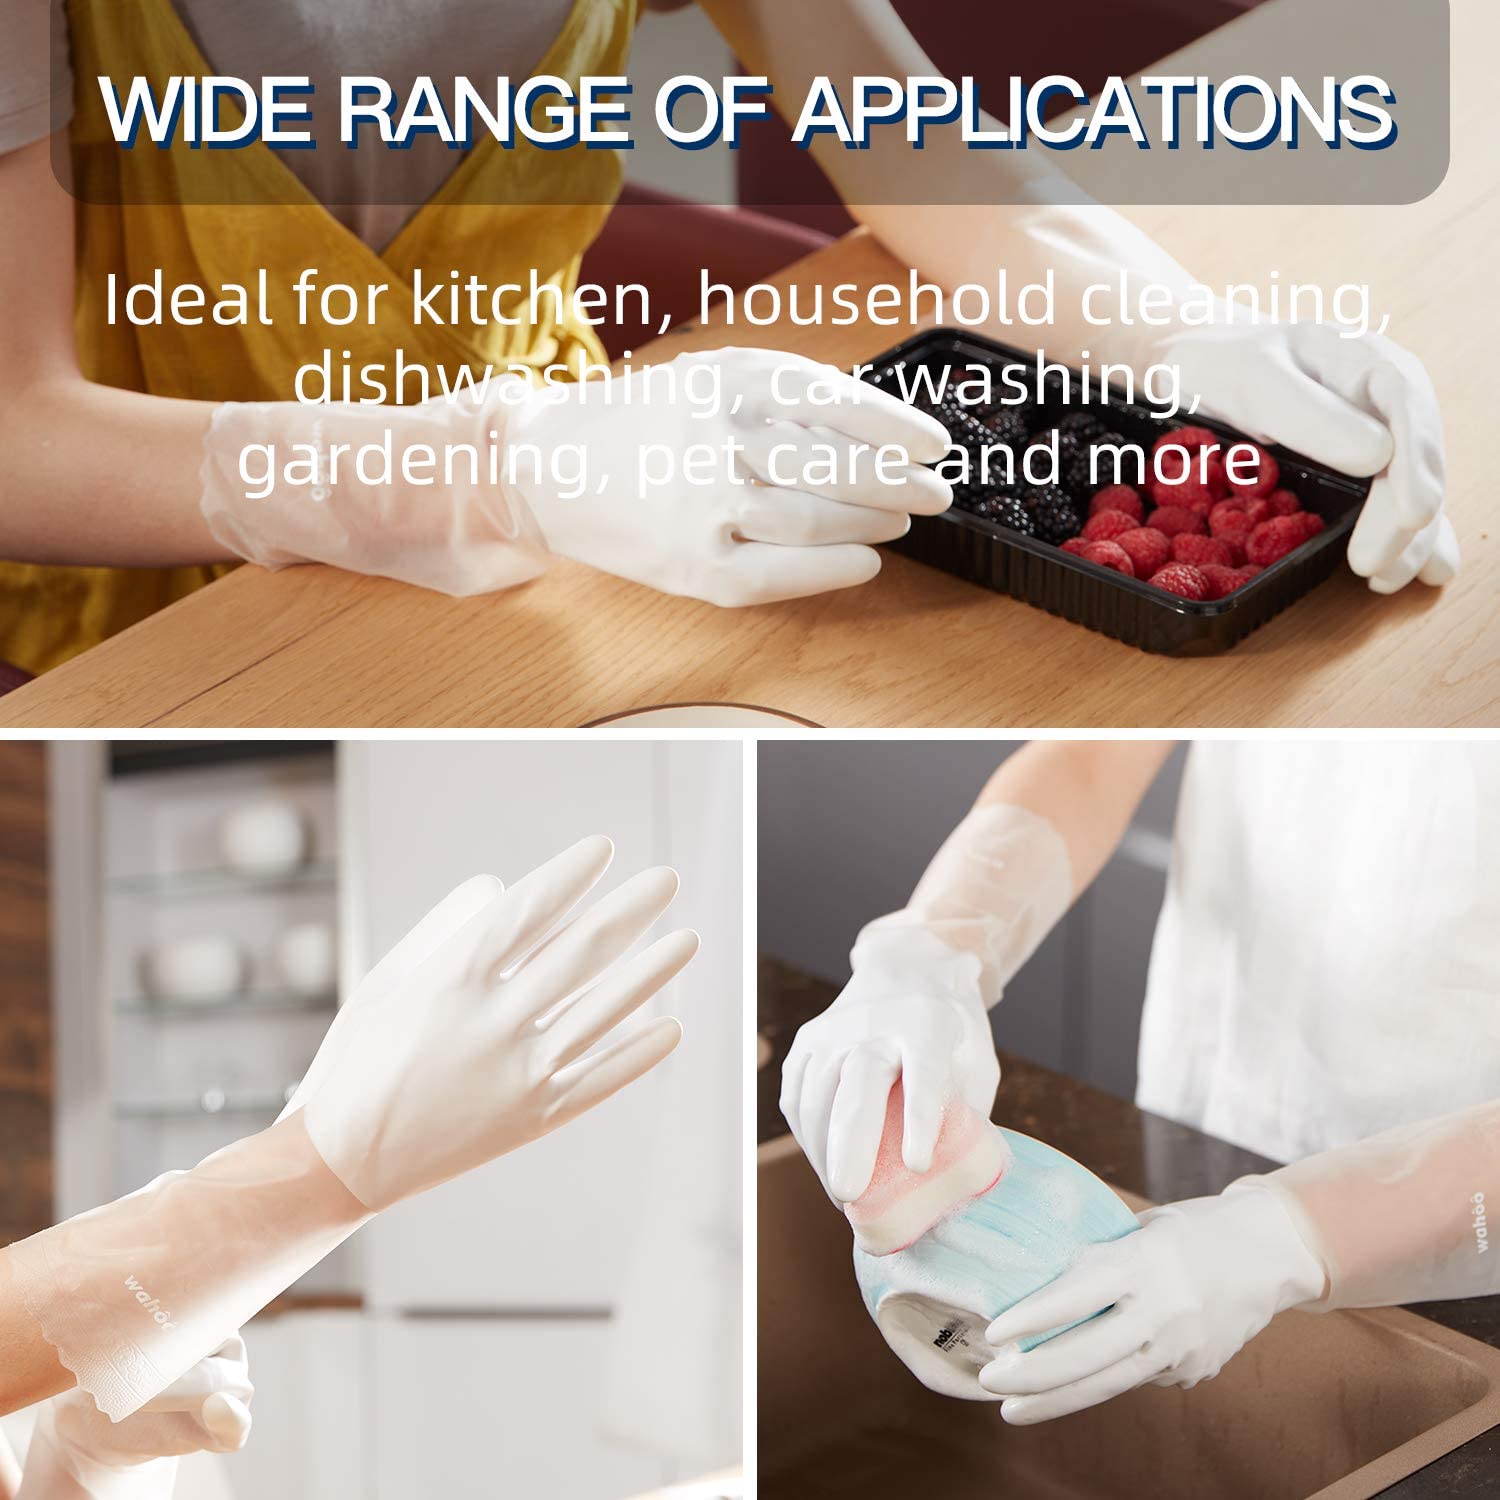 LANON 3 Pairs Premium PVC Cleaning Gloves